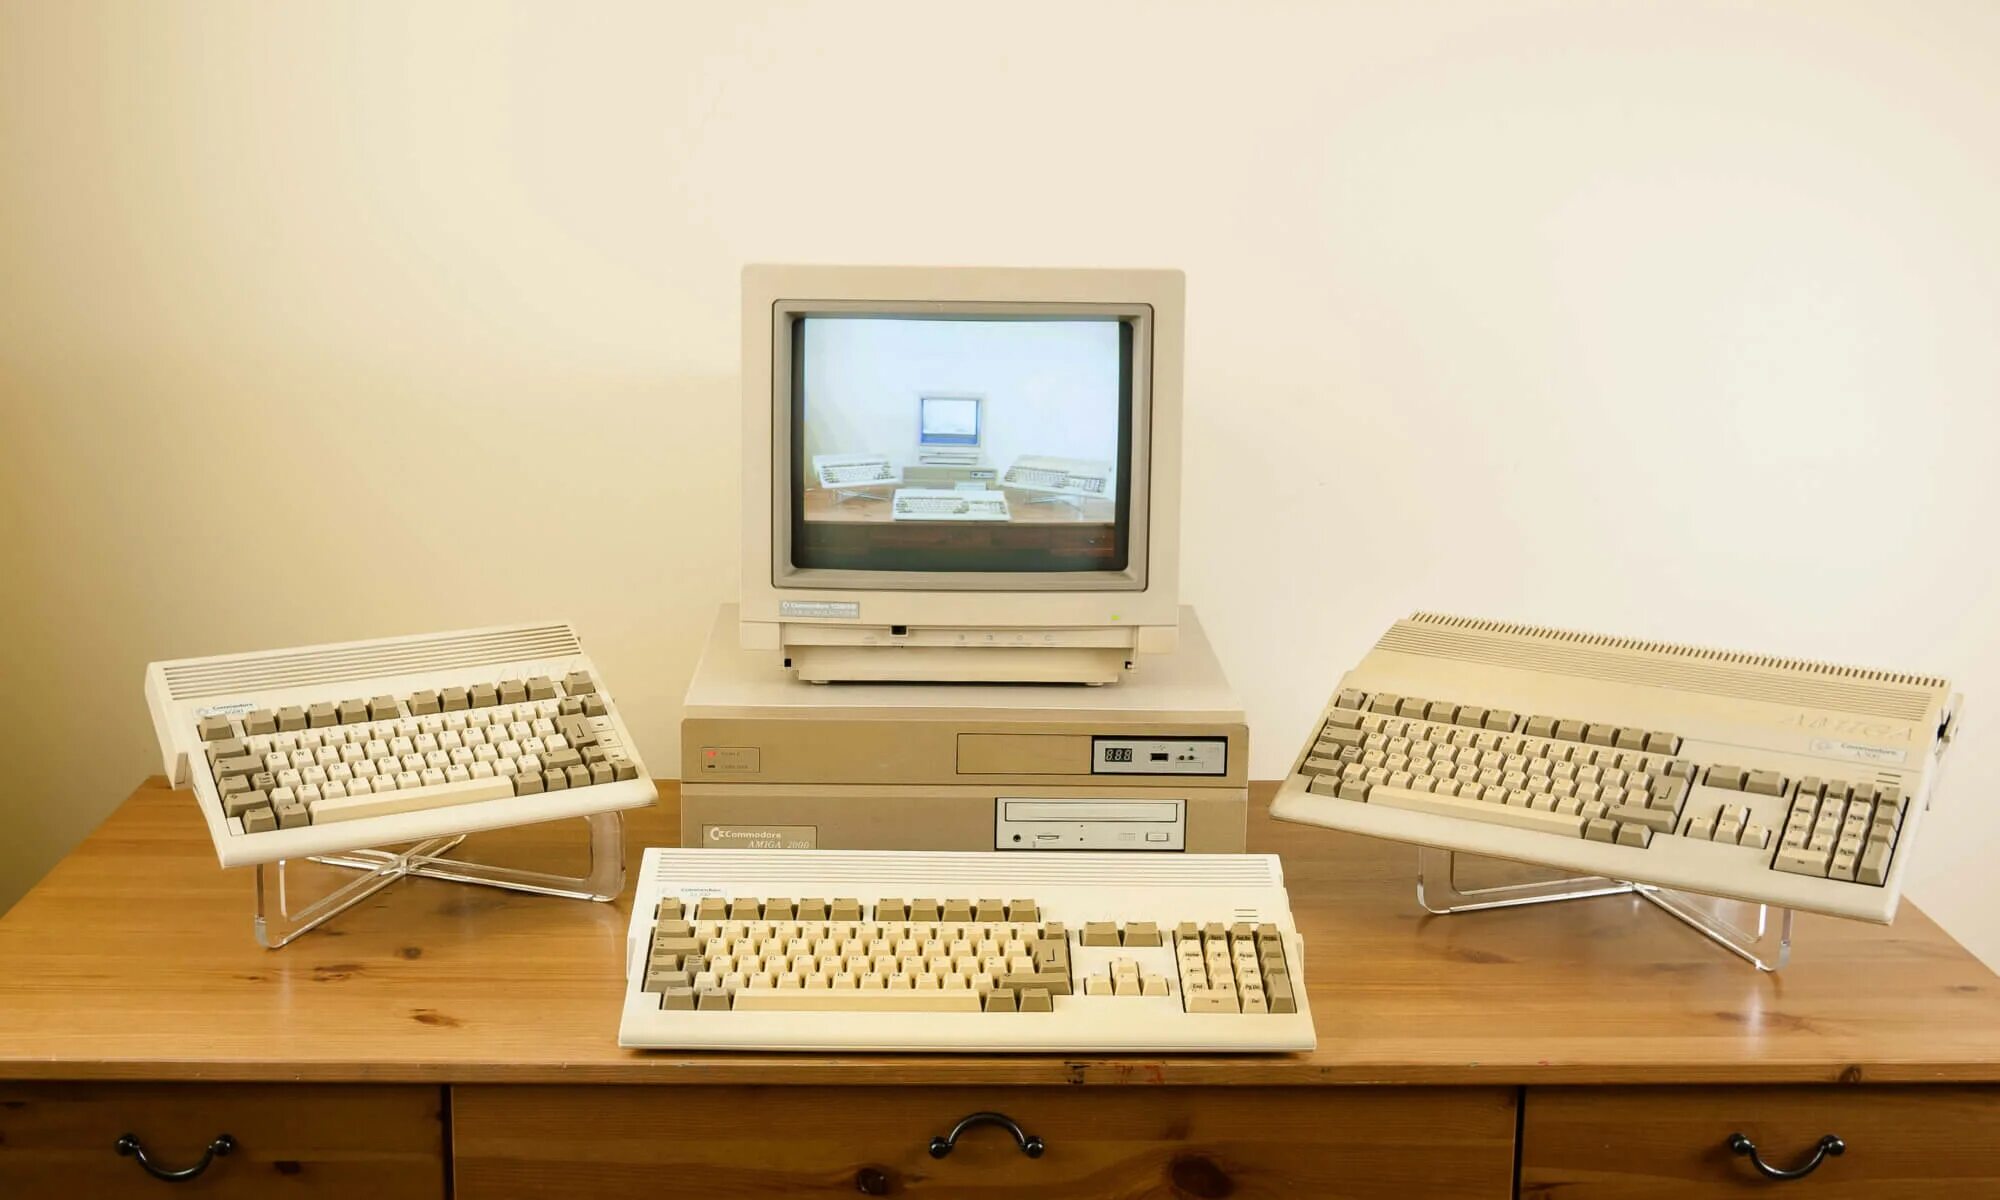 Компьютеры 90 х годов. Компьютер IBM 286. Старый компьютер. Компьютер 90-х. Ретро компьютер.